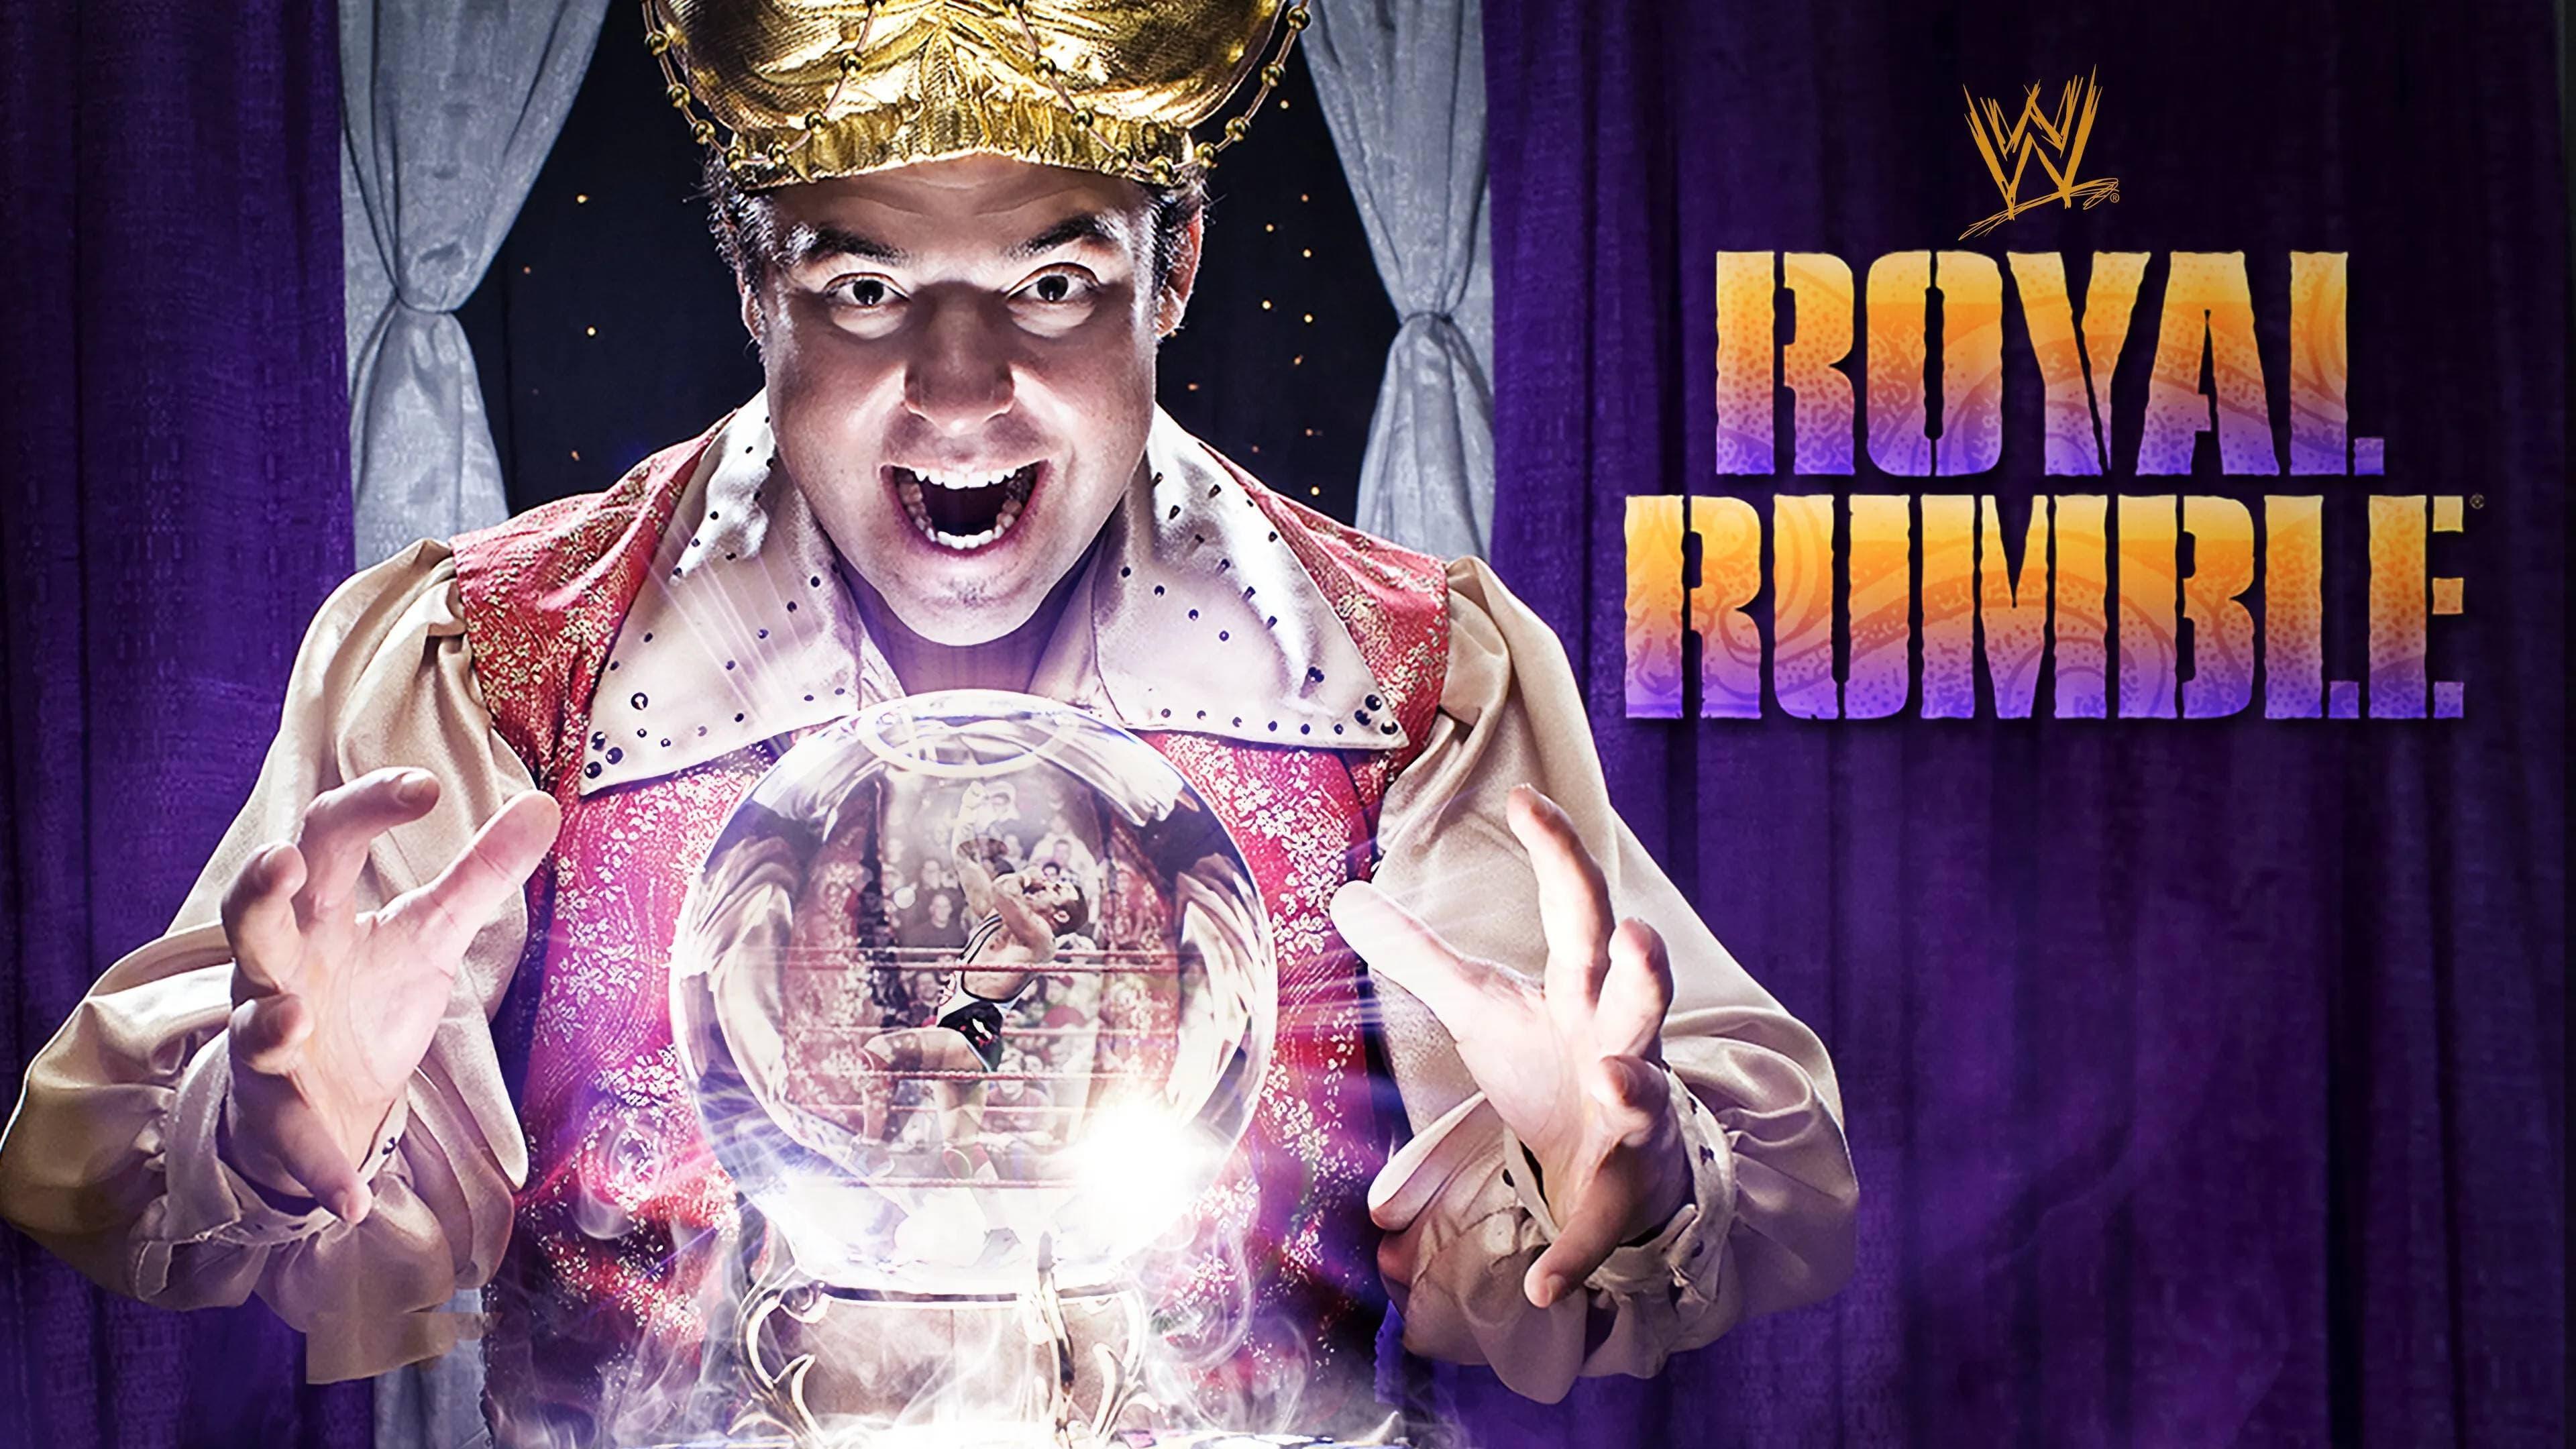 WWE Royal Rumble 2012 backdrop